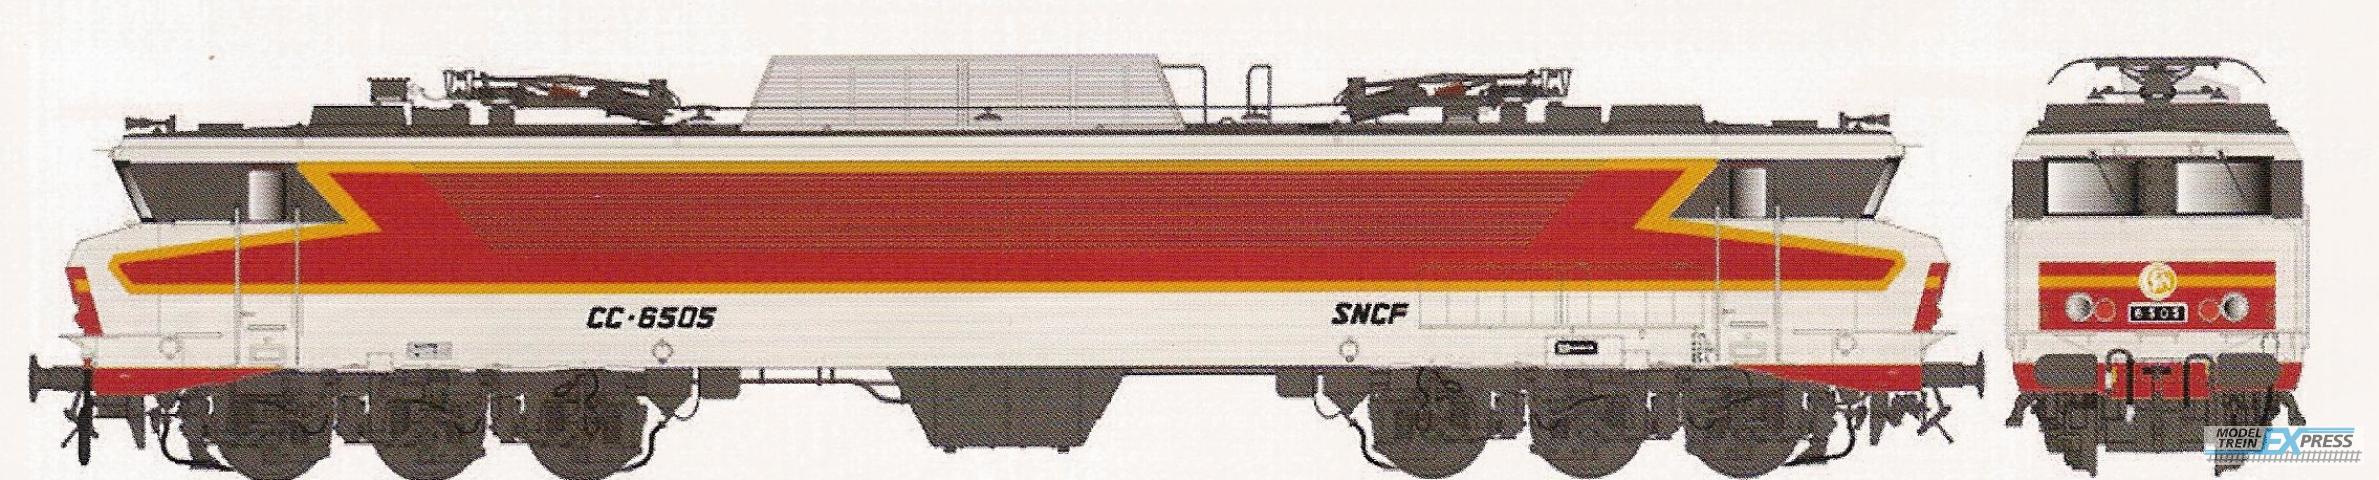 LS Models 10823 CC 6505, grijs/rood/oranje, TEE, platen, Beffara logo, zuidoost  /  Ep. IV  /  SNCF  /  HO  /  AC  /  1 P.